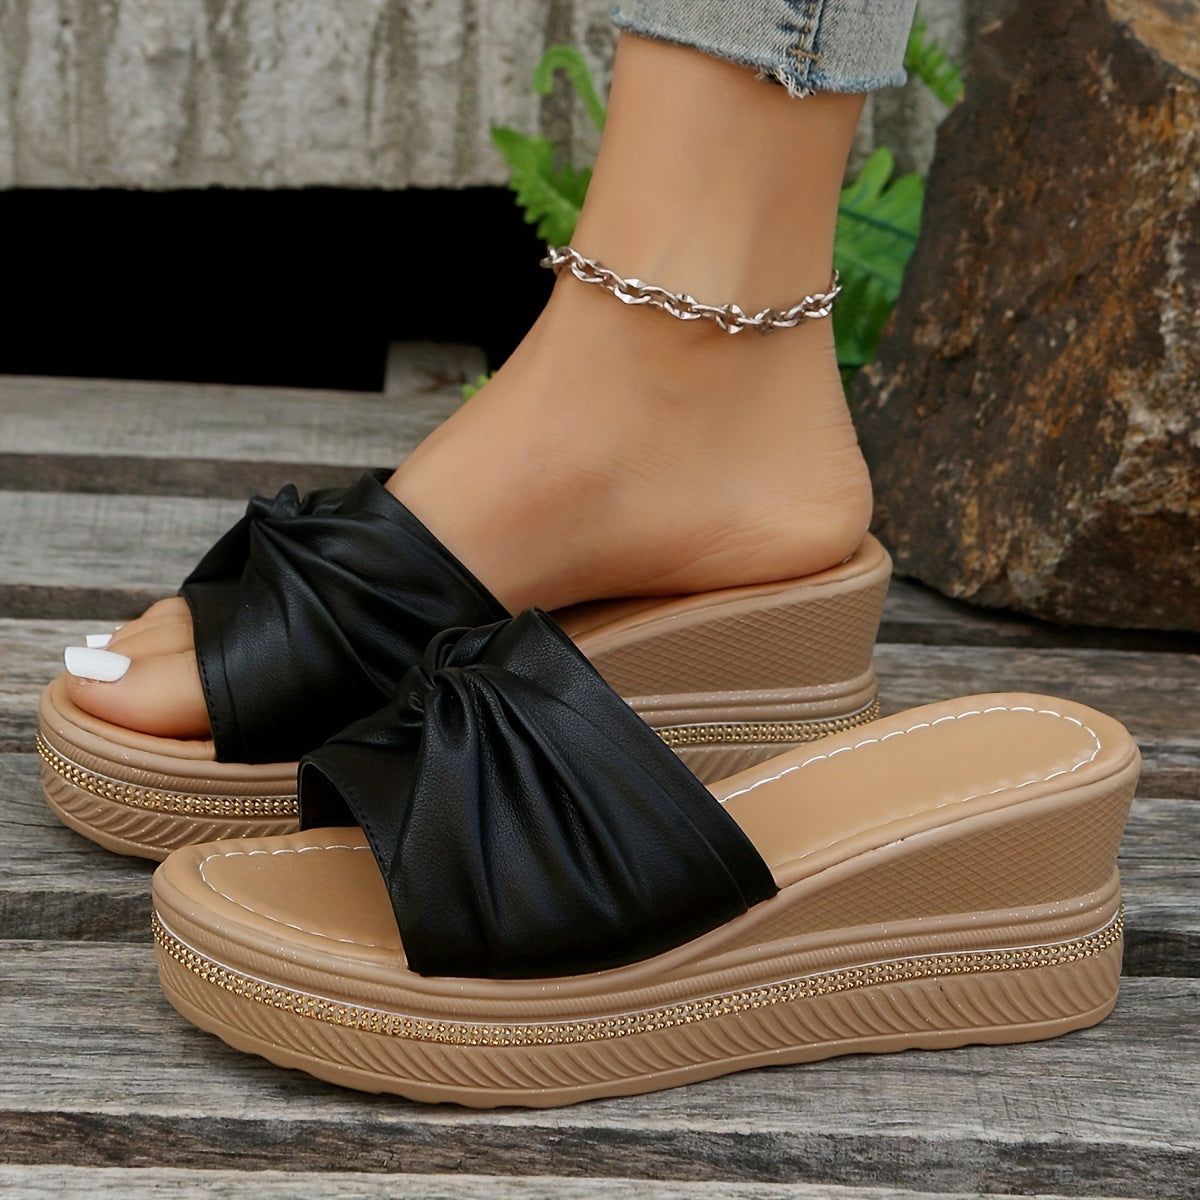 Women's Bowknot Wedge Sandals, Single Band Open Toe Slip On Platform Shoes, Versatile Ladies Sandals